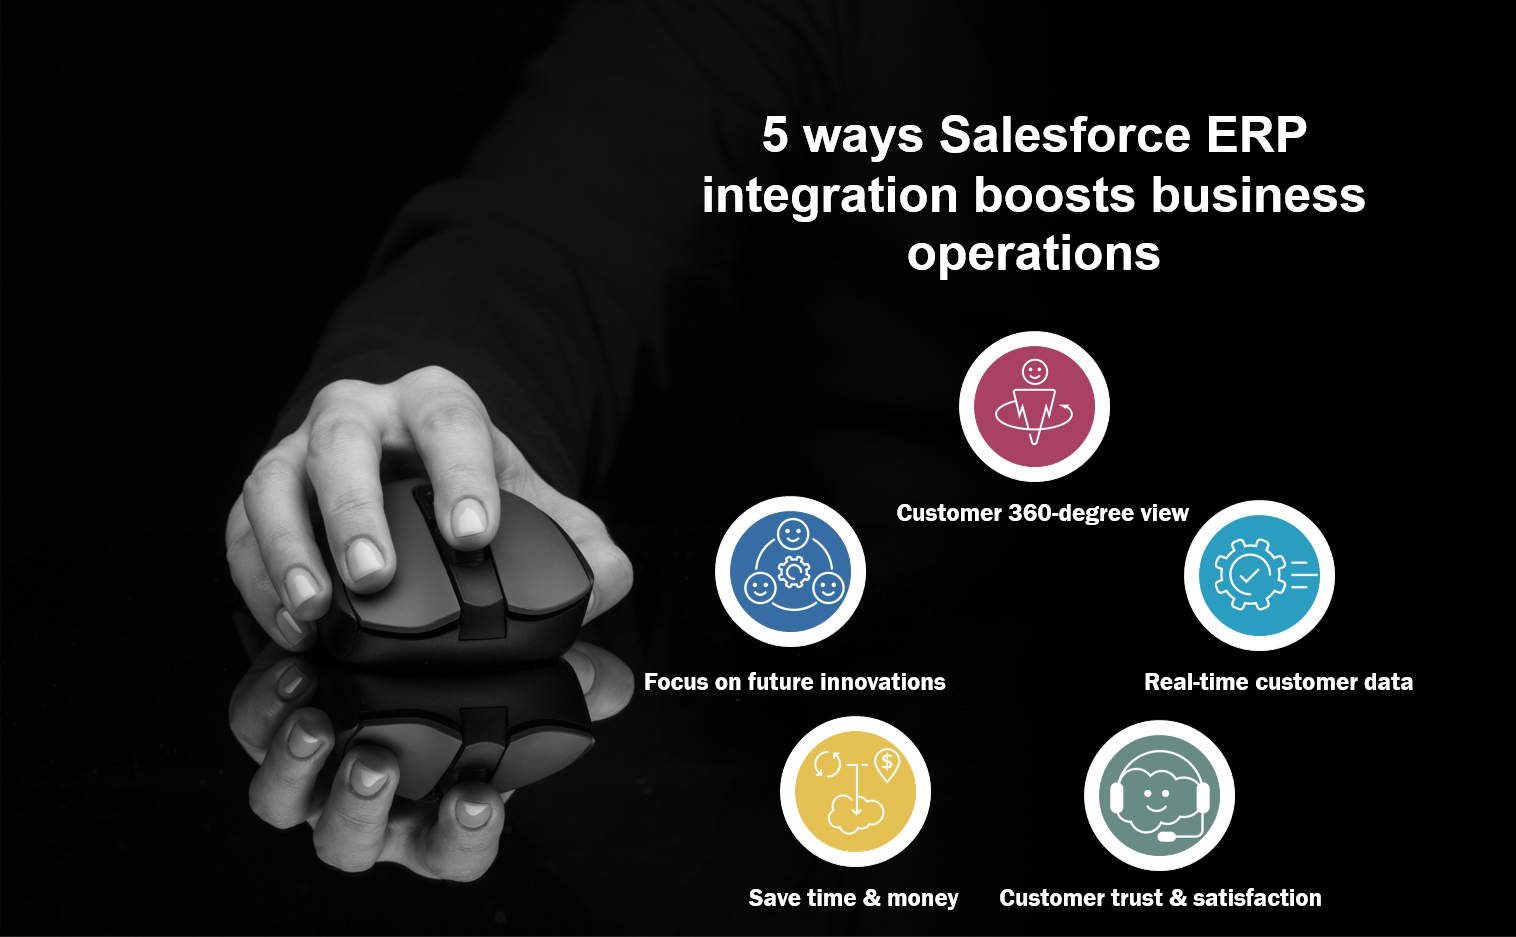 5 ways salesforce erp data integration improves business operations